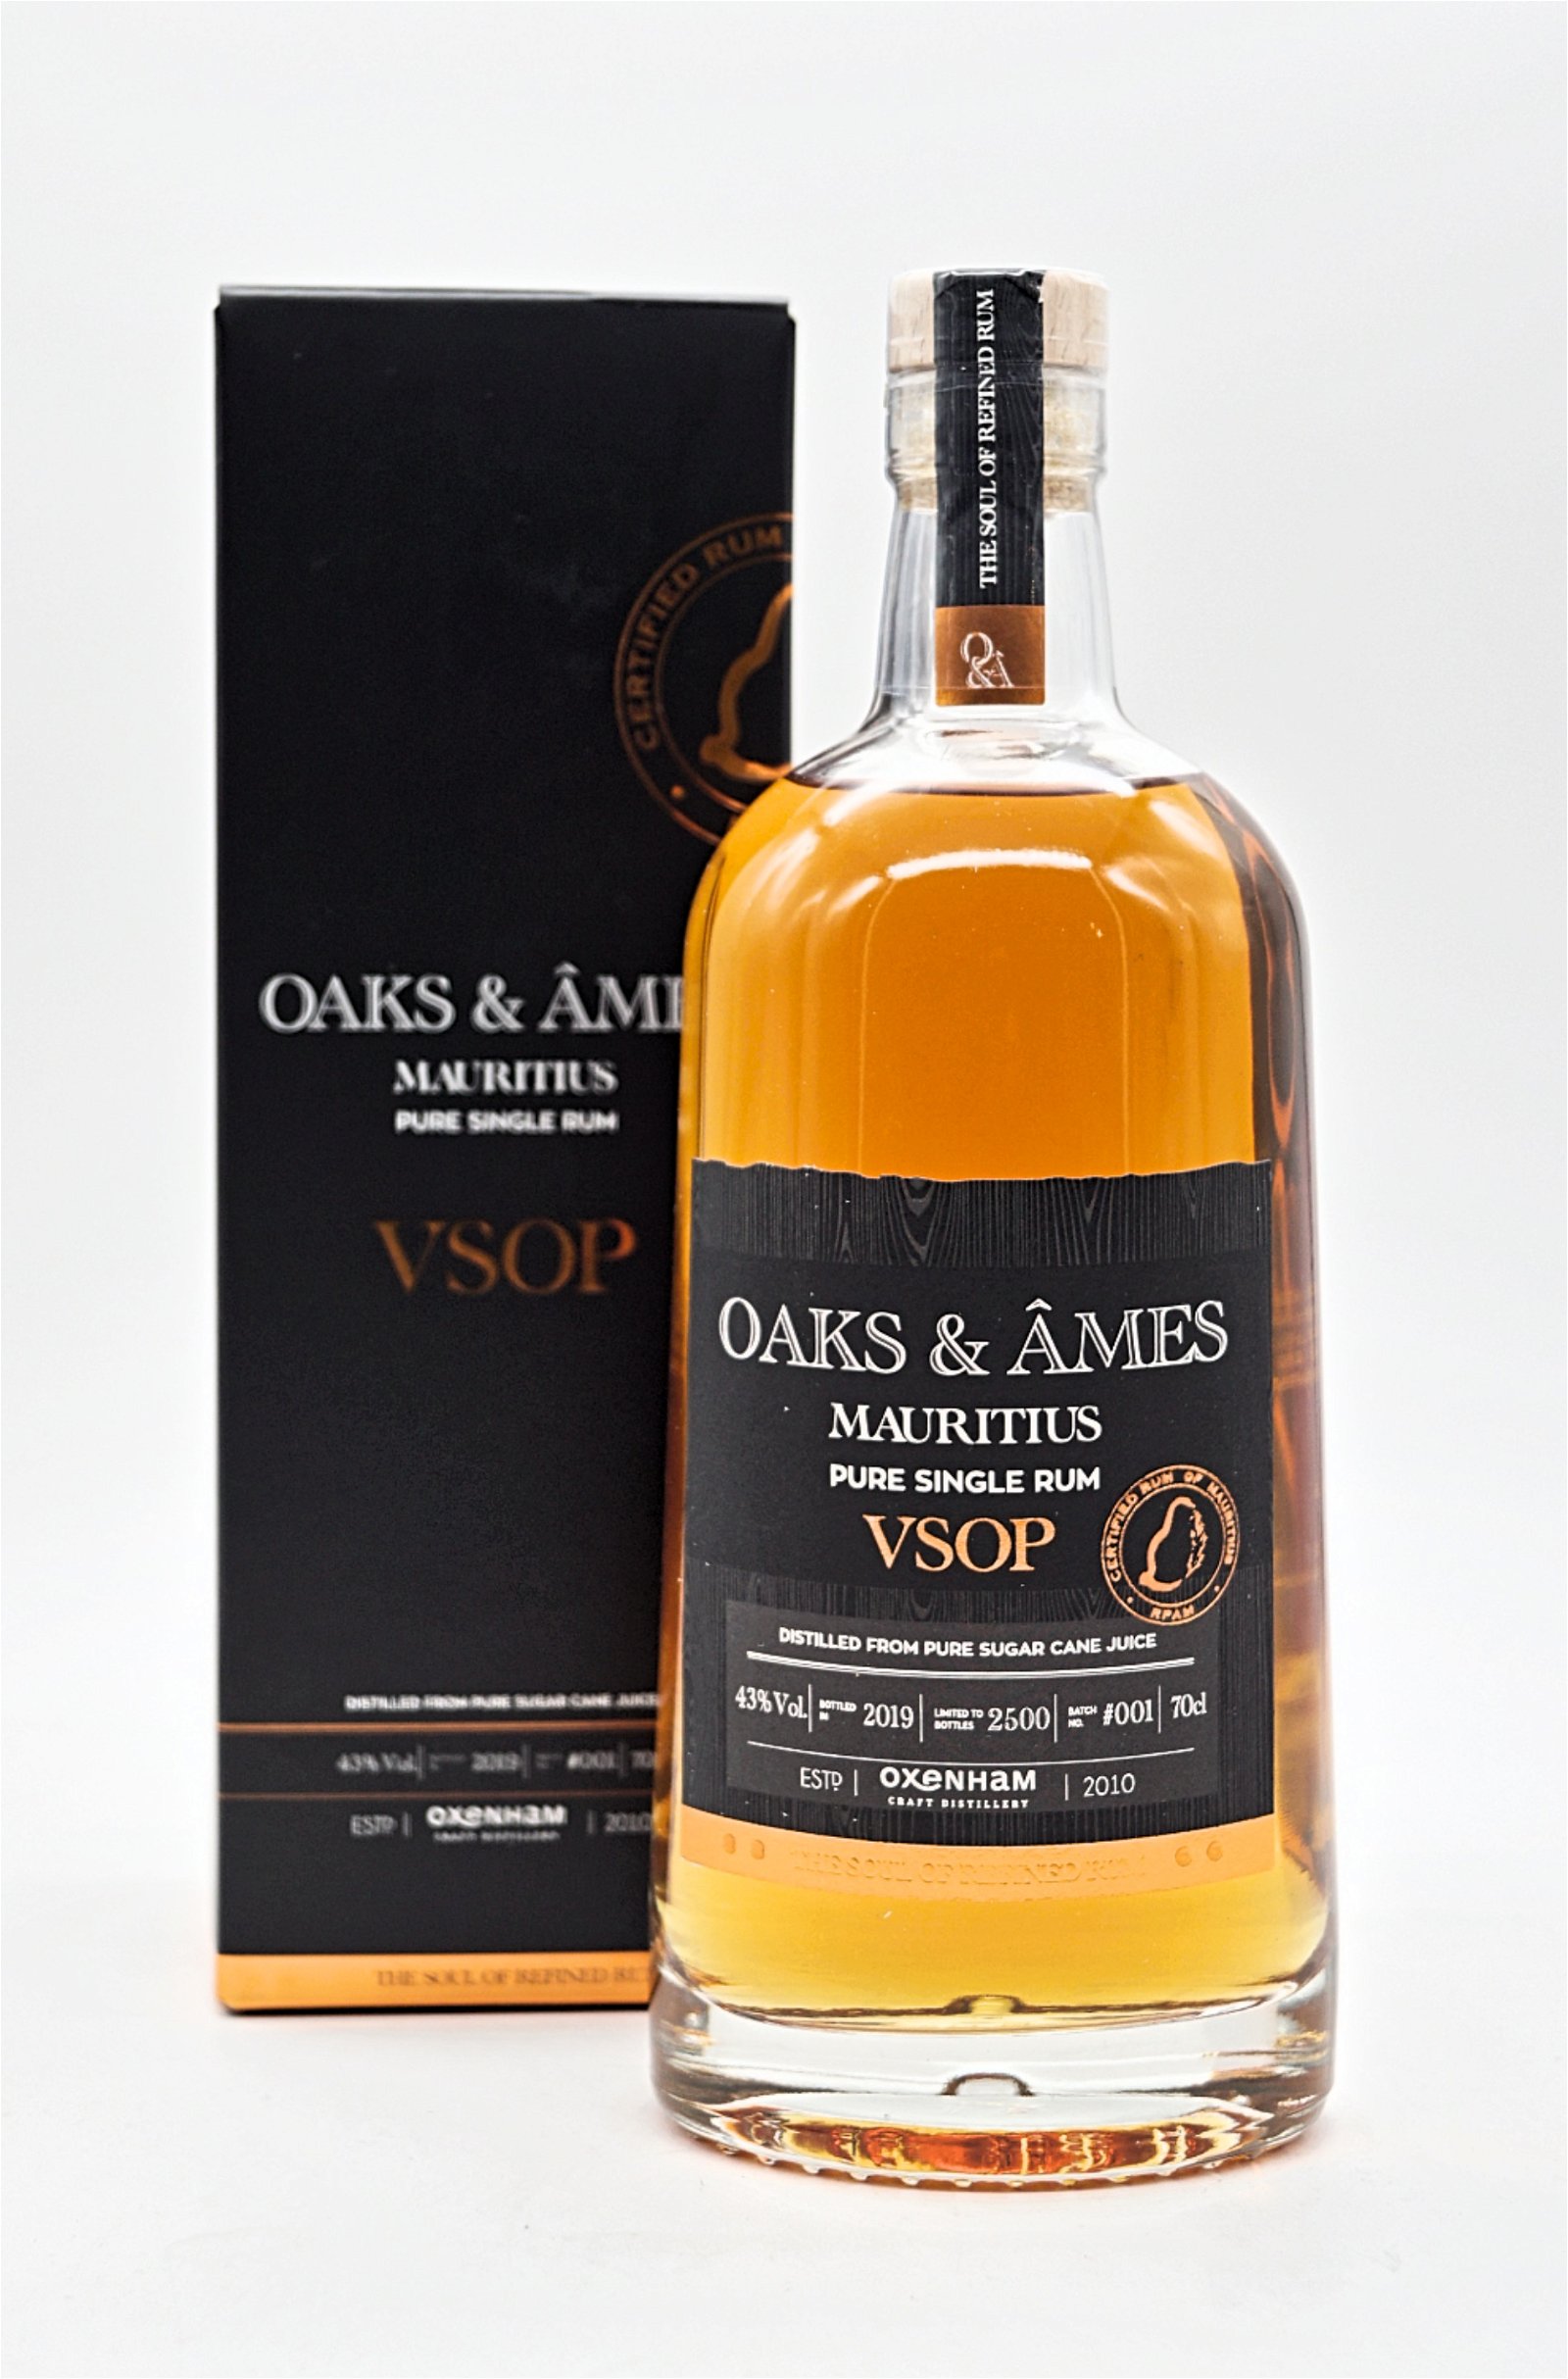 Oaks & Ames VSOP Mauritius Pure Single Rum Batch #001